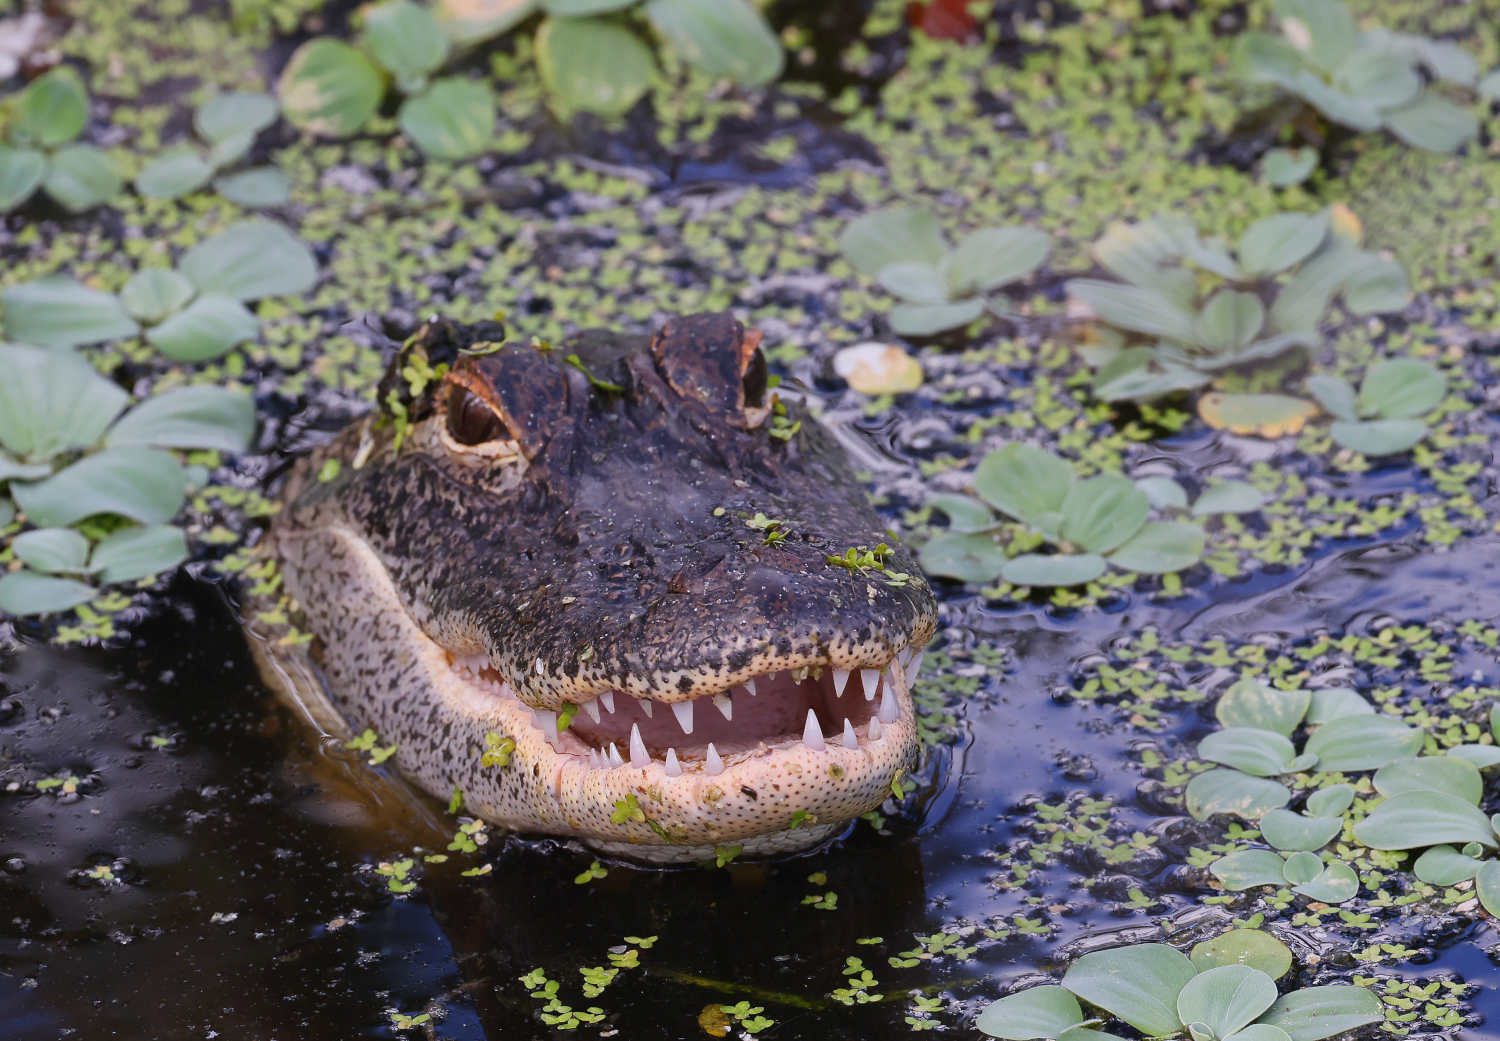 Haunted Florida highways and interstates always have alligators nearby